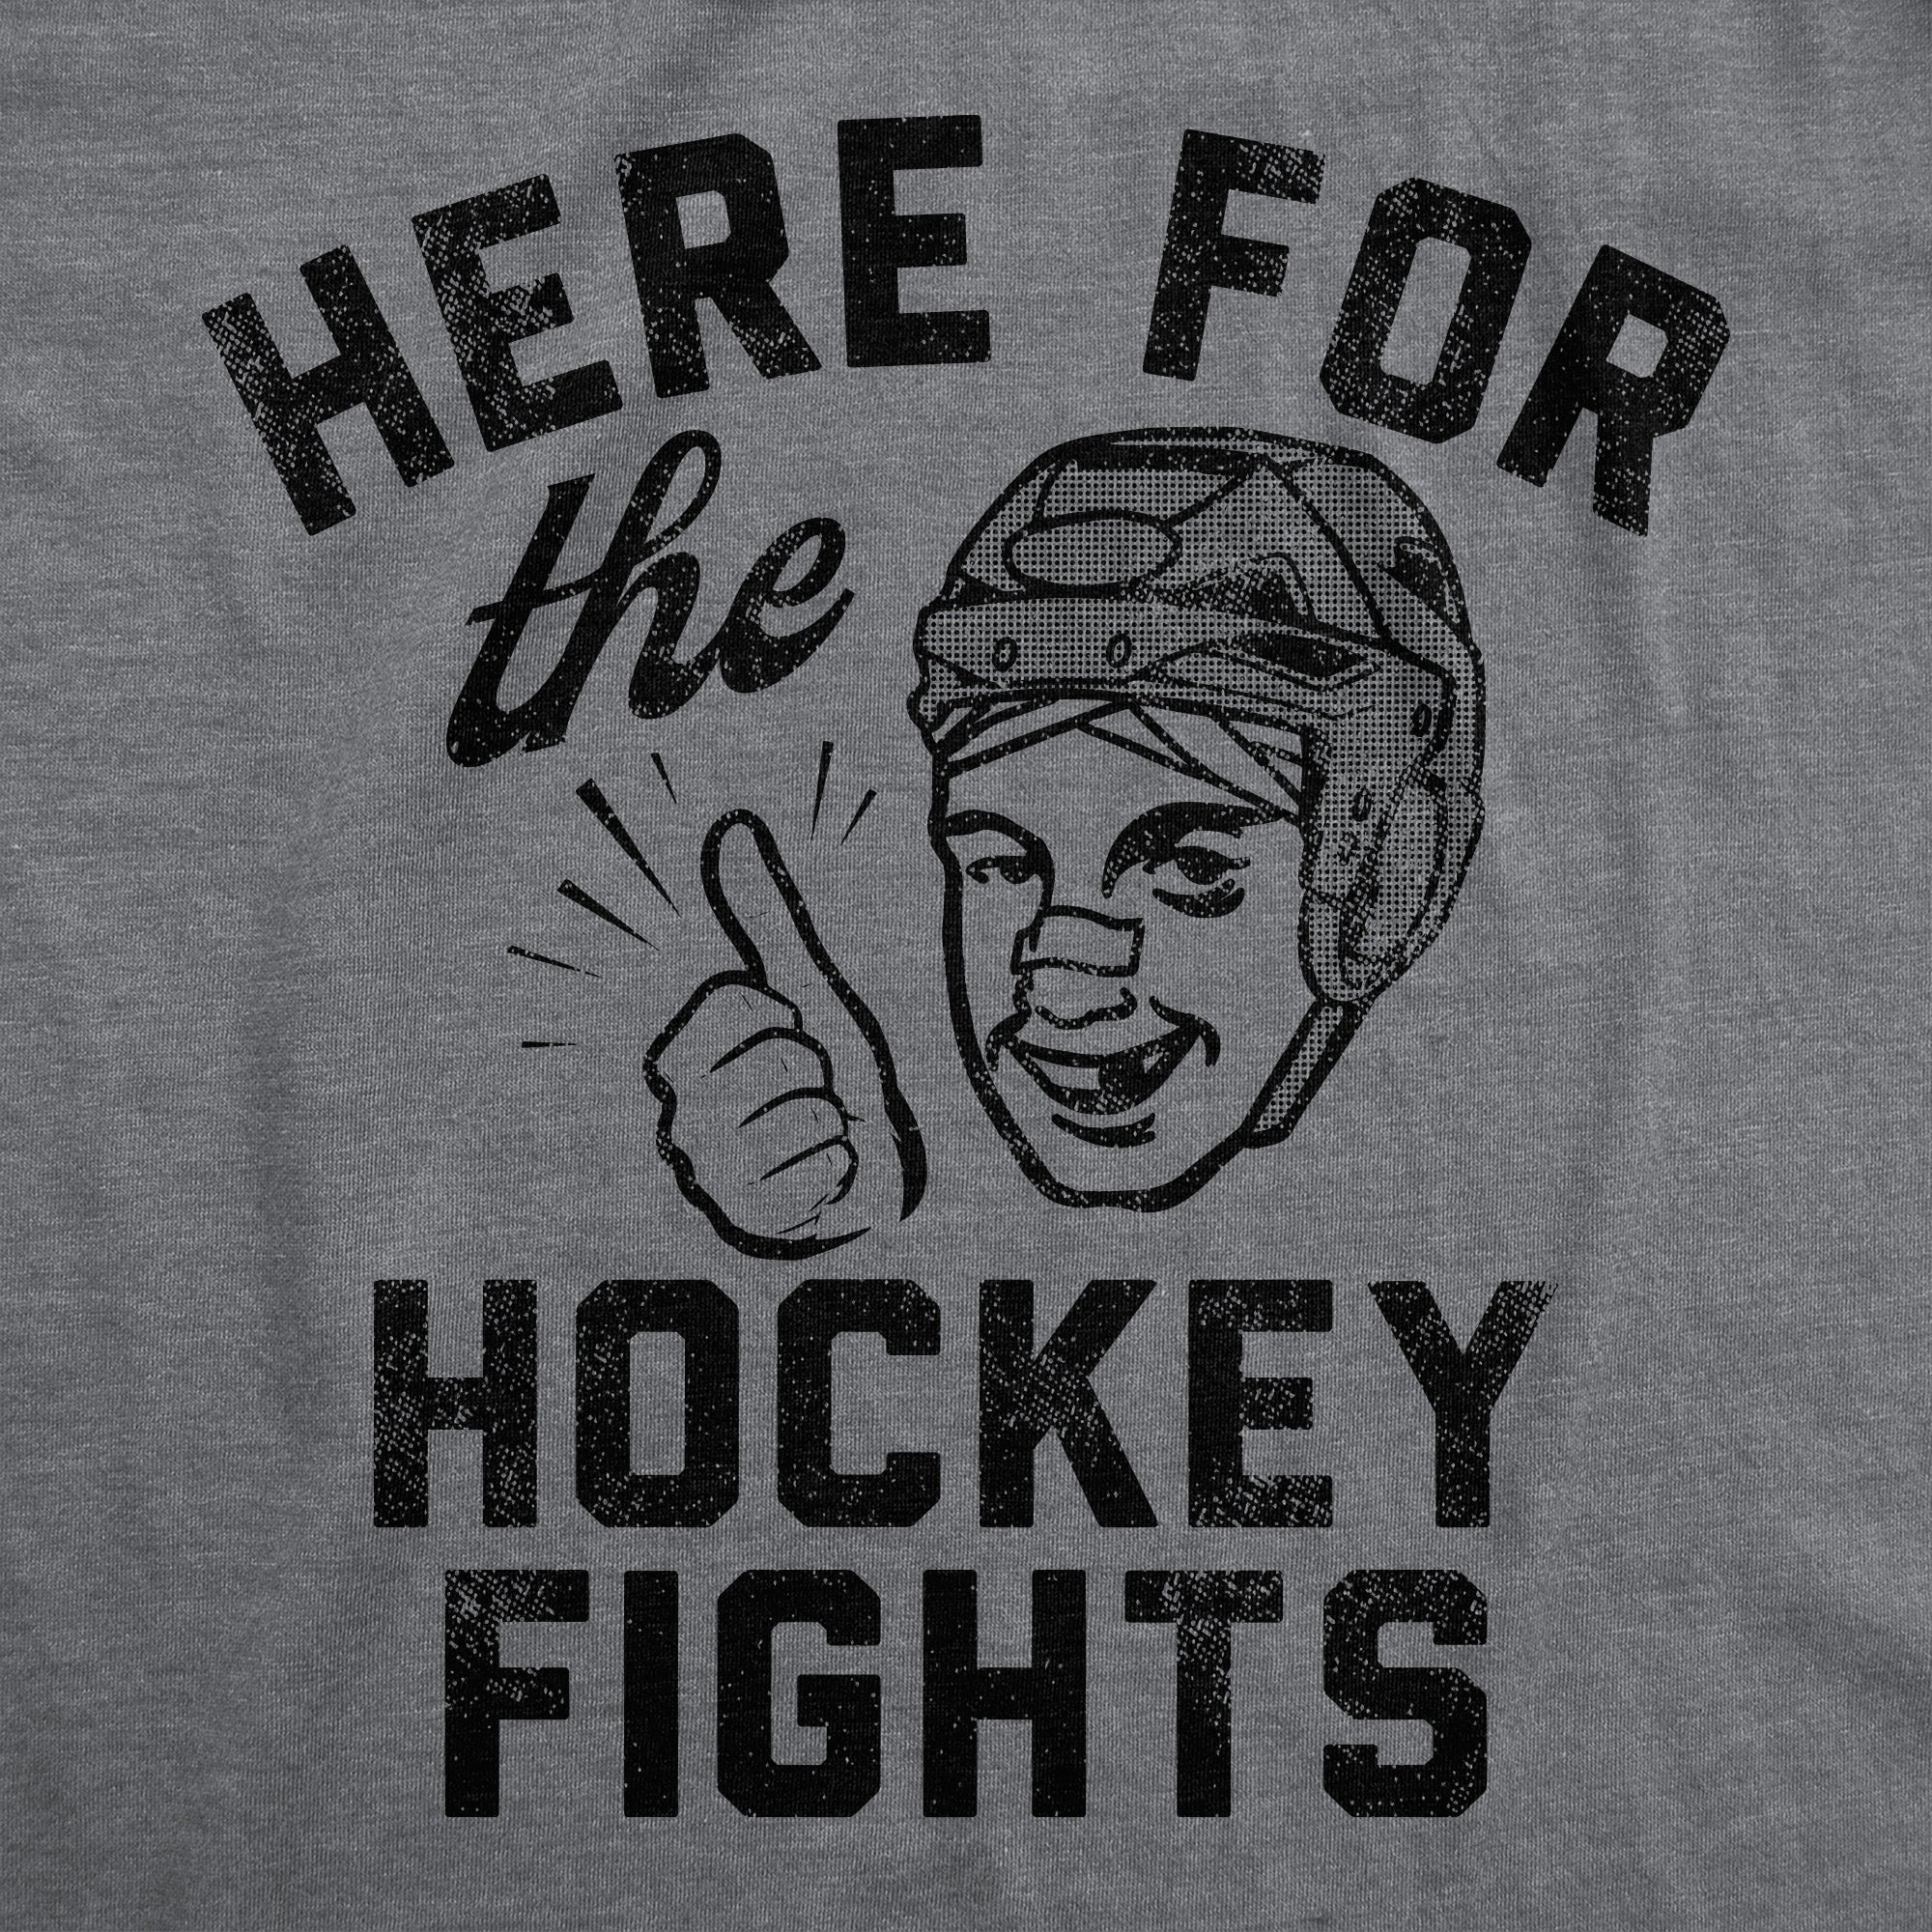 Funny Dark Heather Grey - Hockey Fights Here For The Hockey Fights Mens T Shirt Nerdy Hockey sarcastic Tee